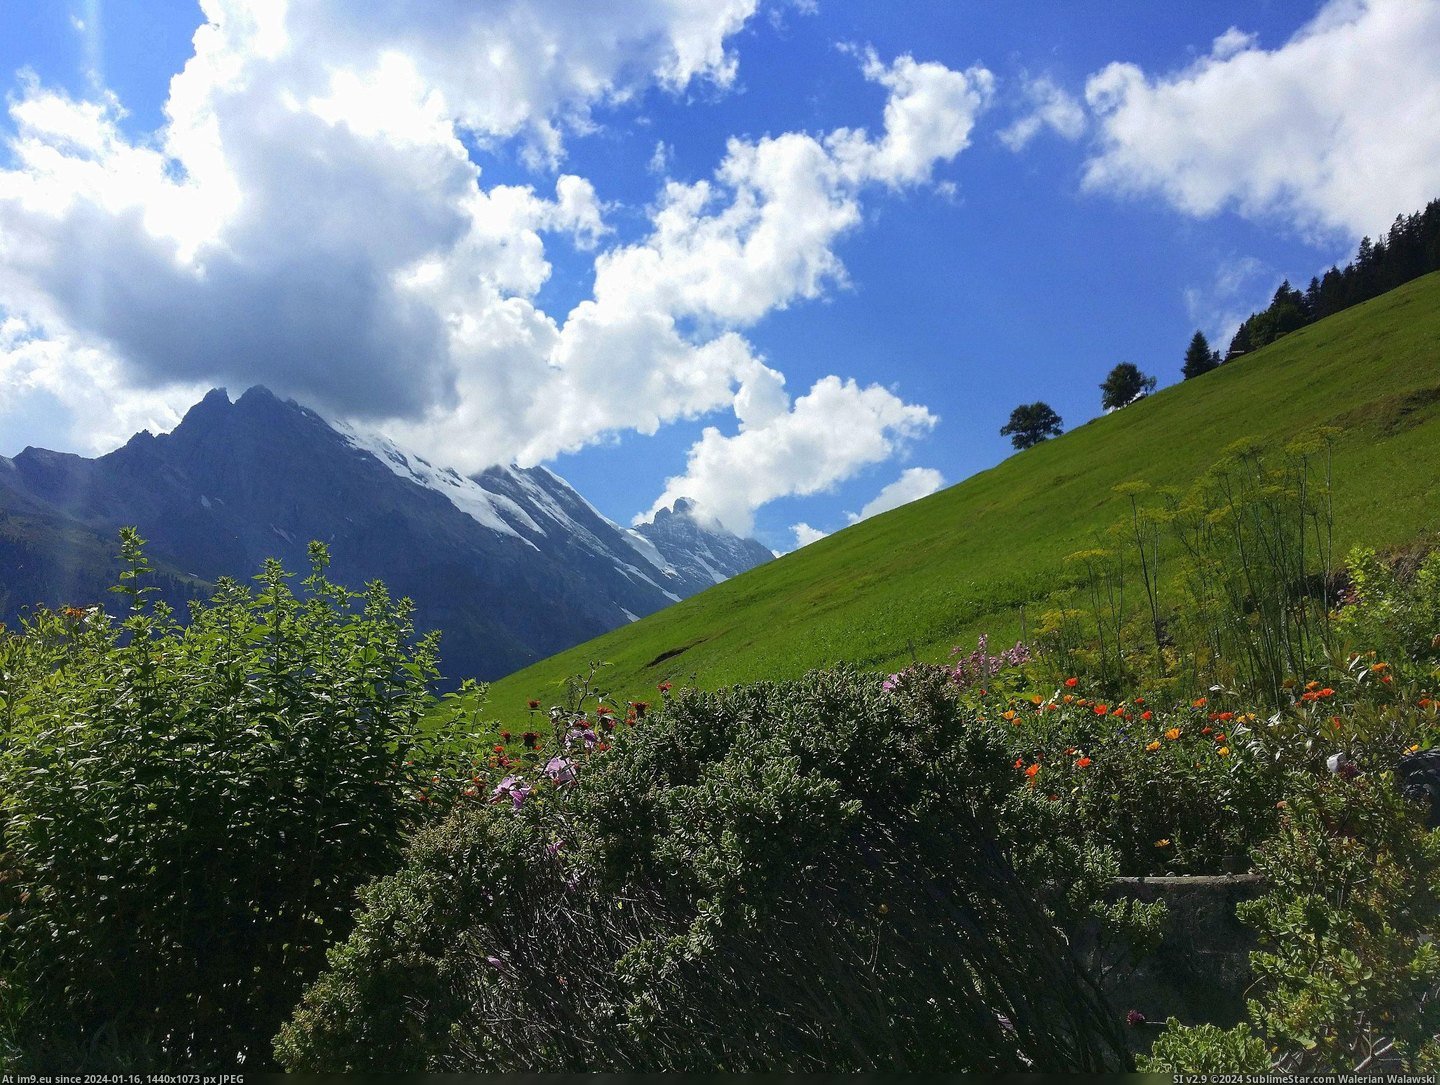 #Mountain #Switzerland #Gimmelwald #Hillside #Grassy [Earthporn] The grassy mountain hillside of Gimmelwald, Switzerland [OC] [2476 x 1857] Pic. (Изображение из альбом My r/EARTHPORN favs))